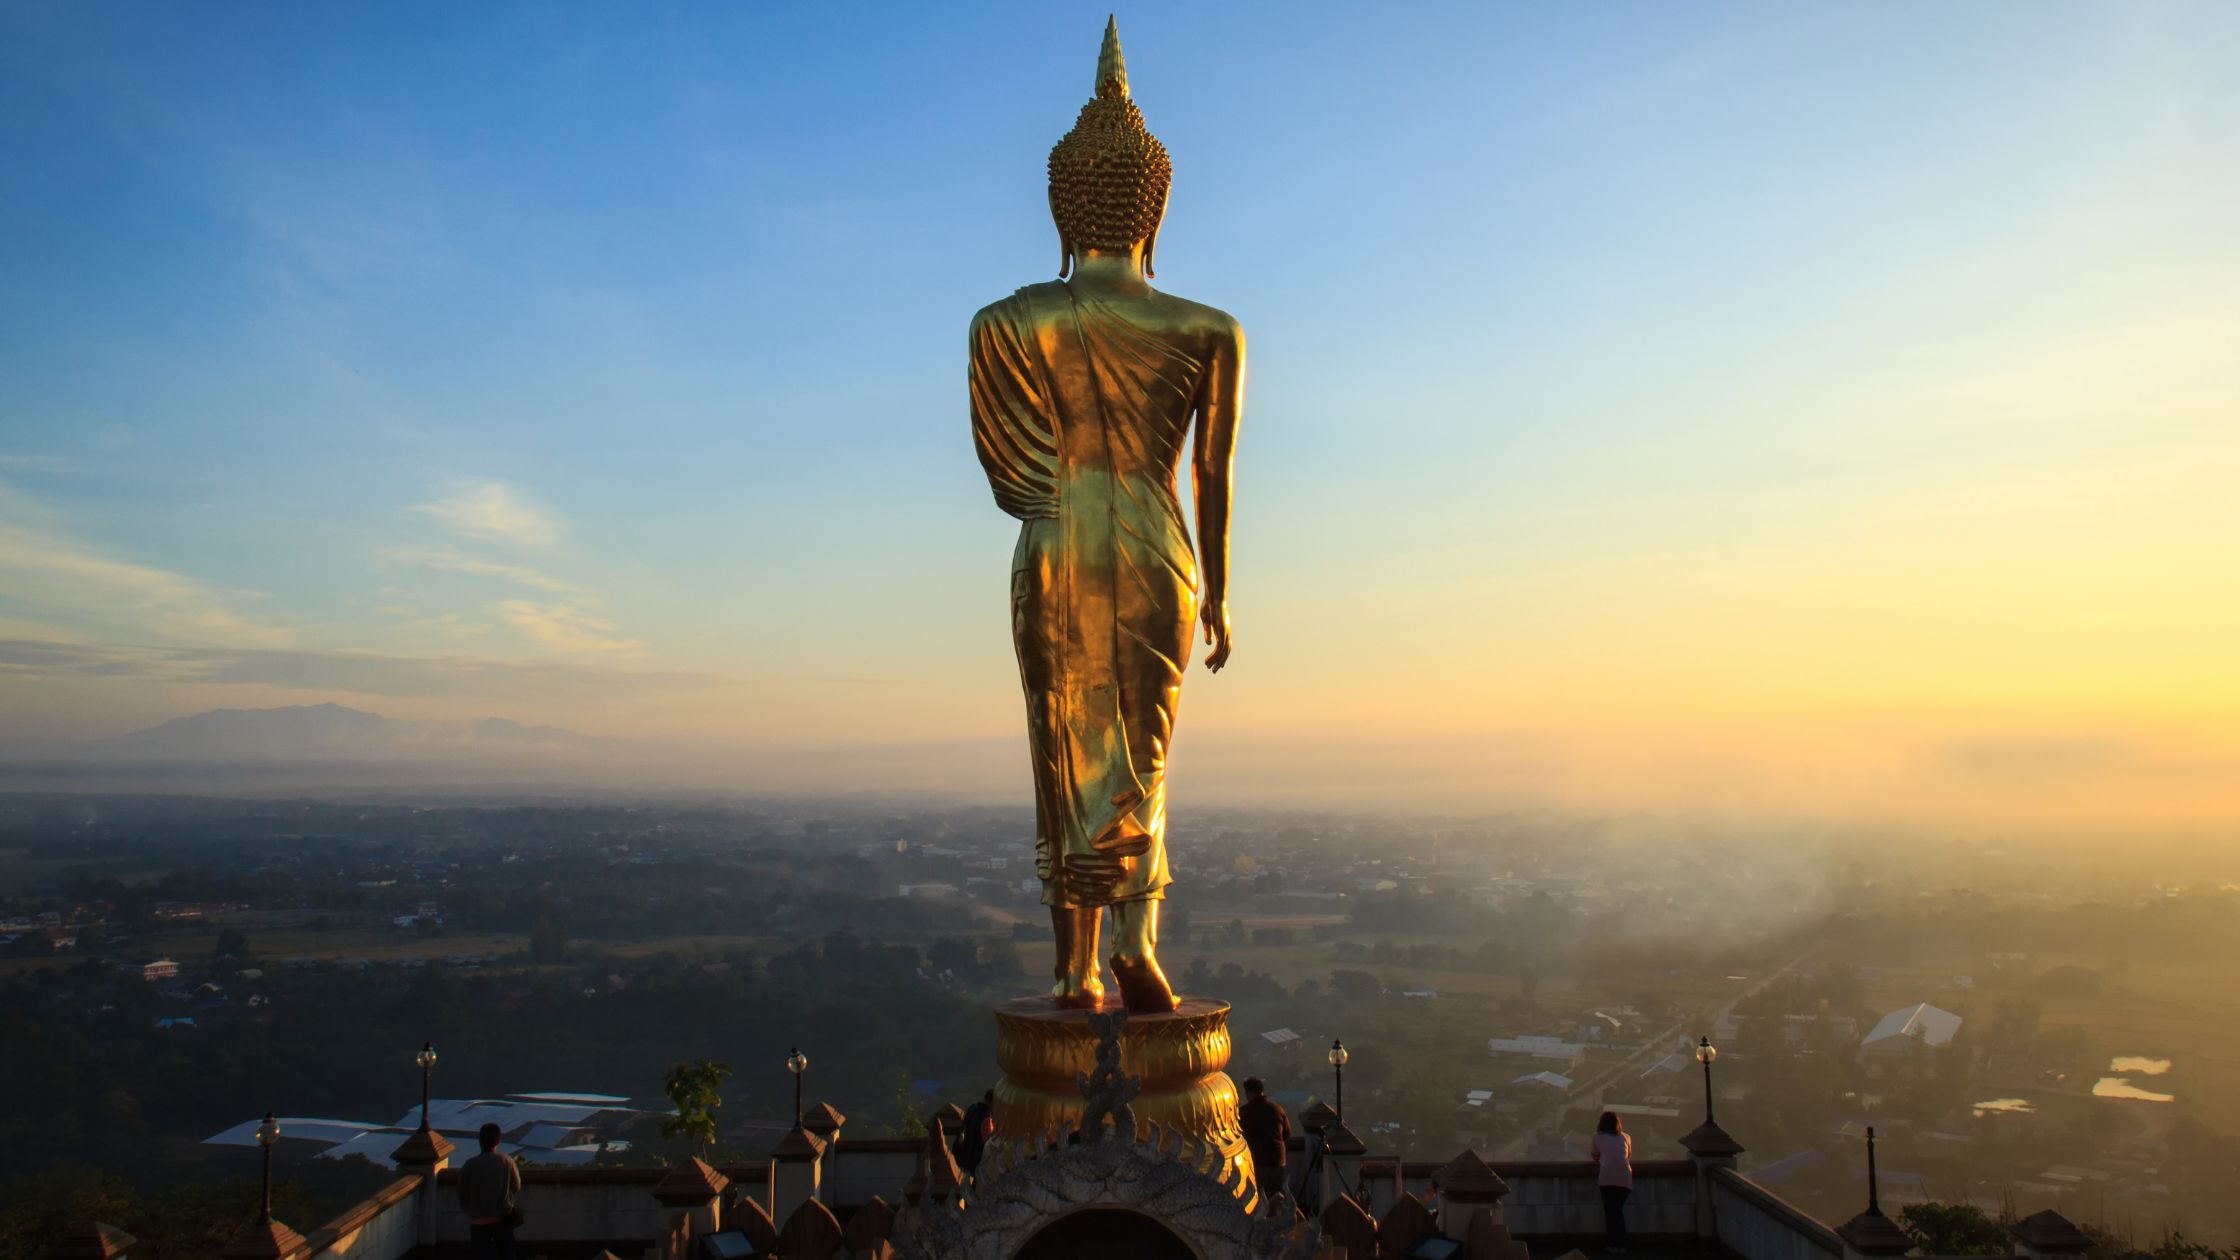 Golden Buddha Statue in Khao Noi Temple, Nan Province, Thailand.